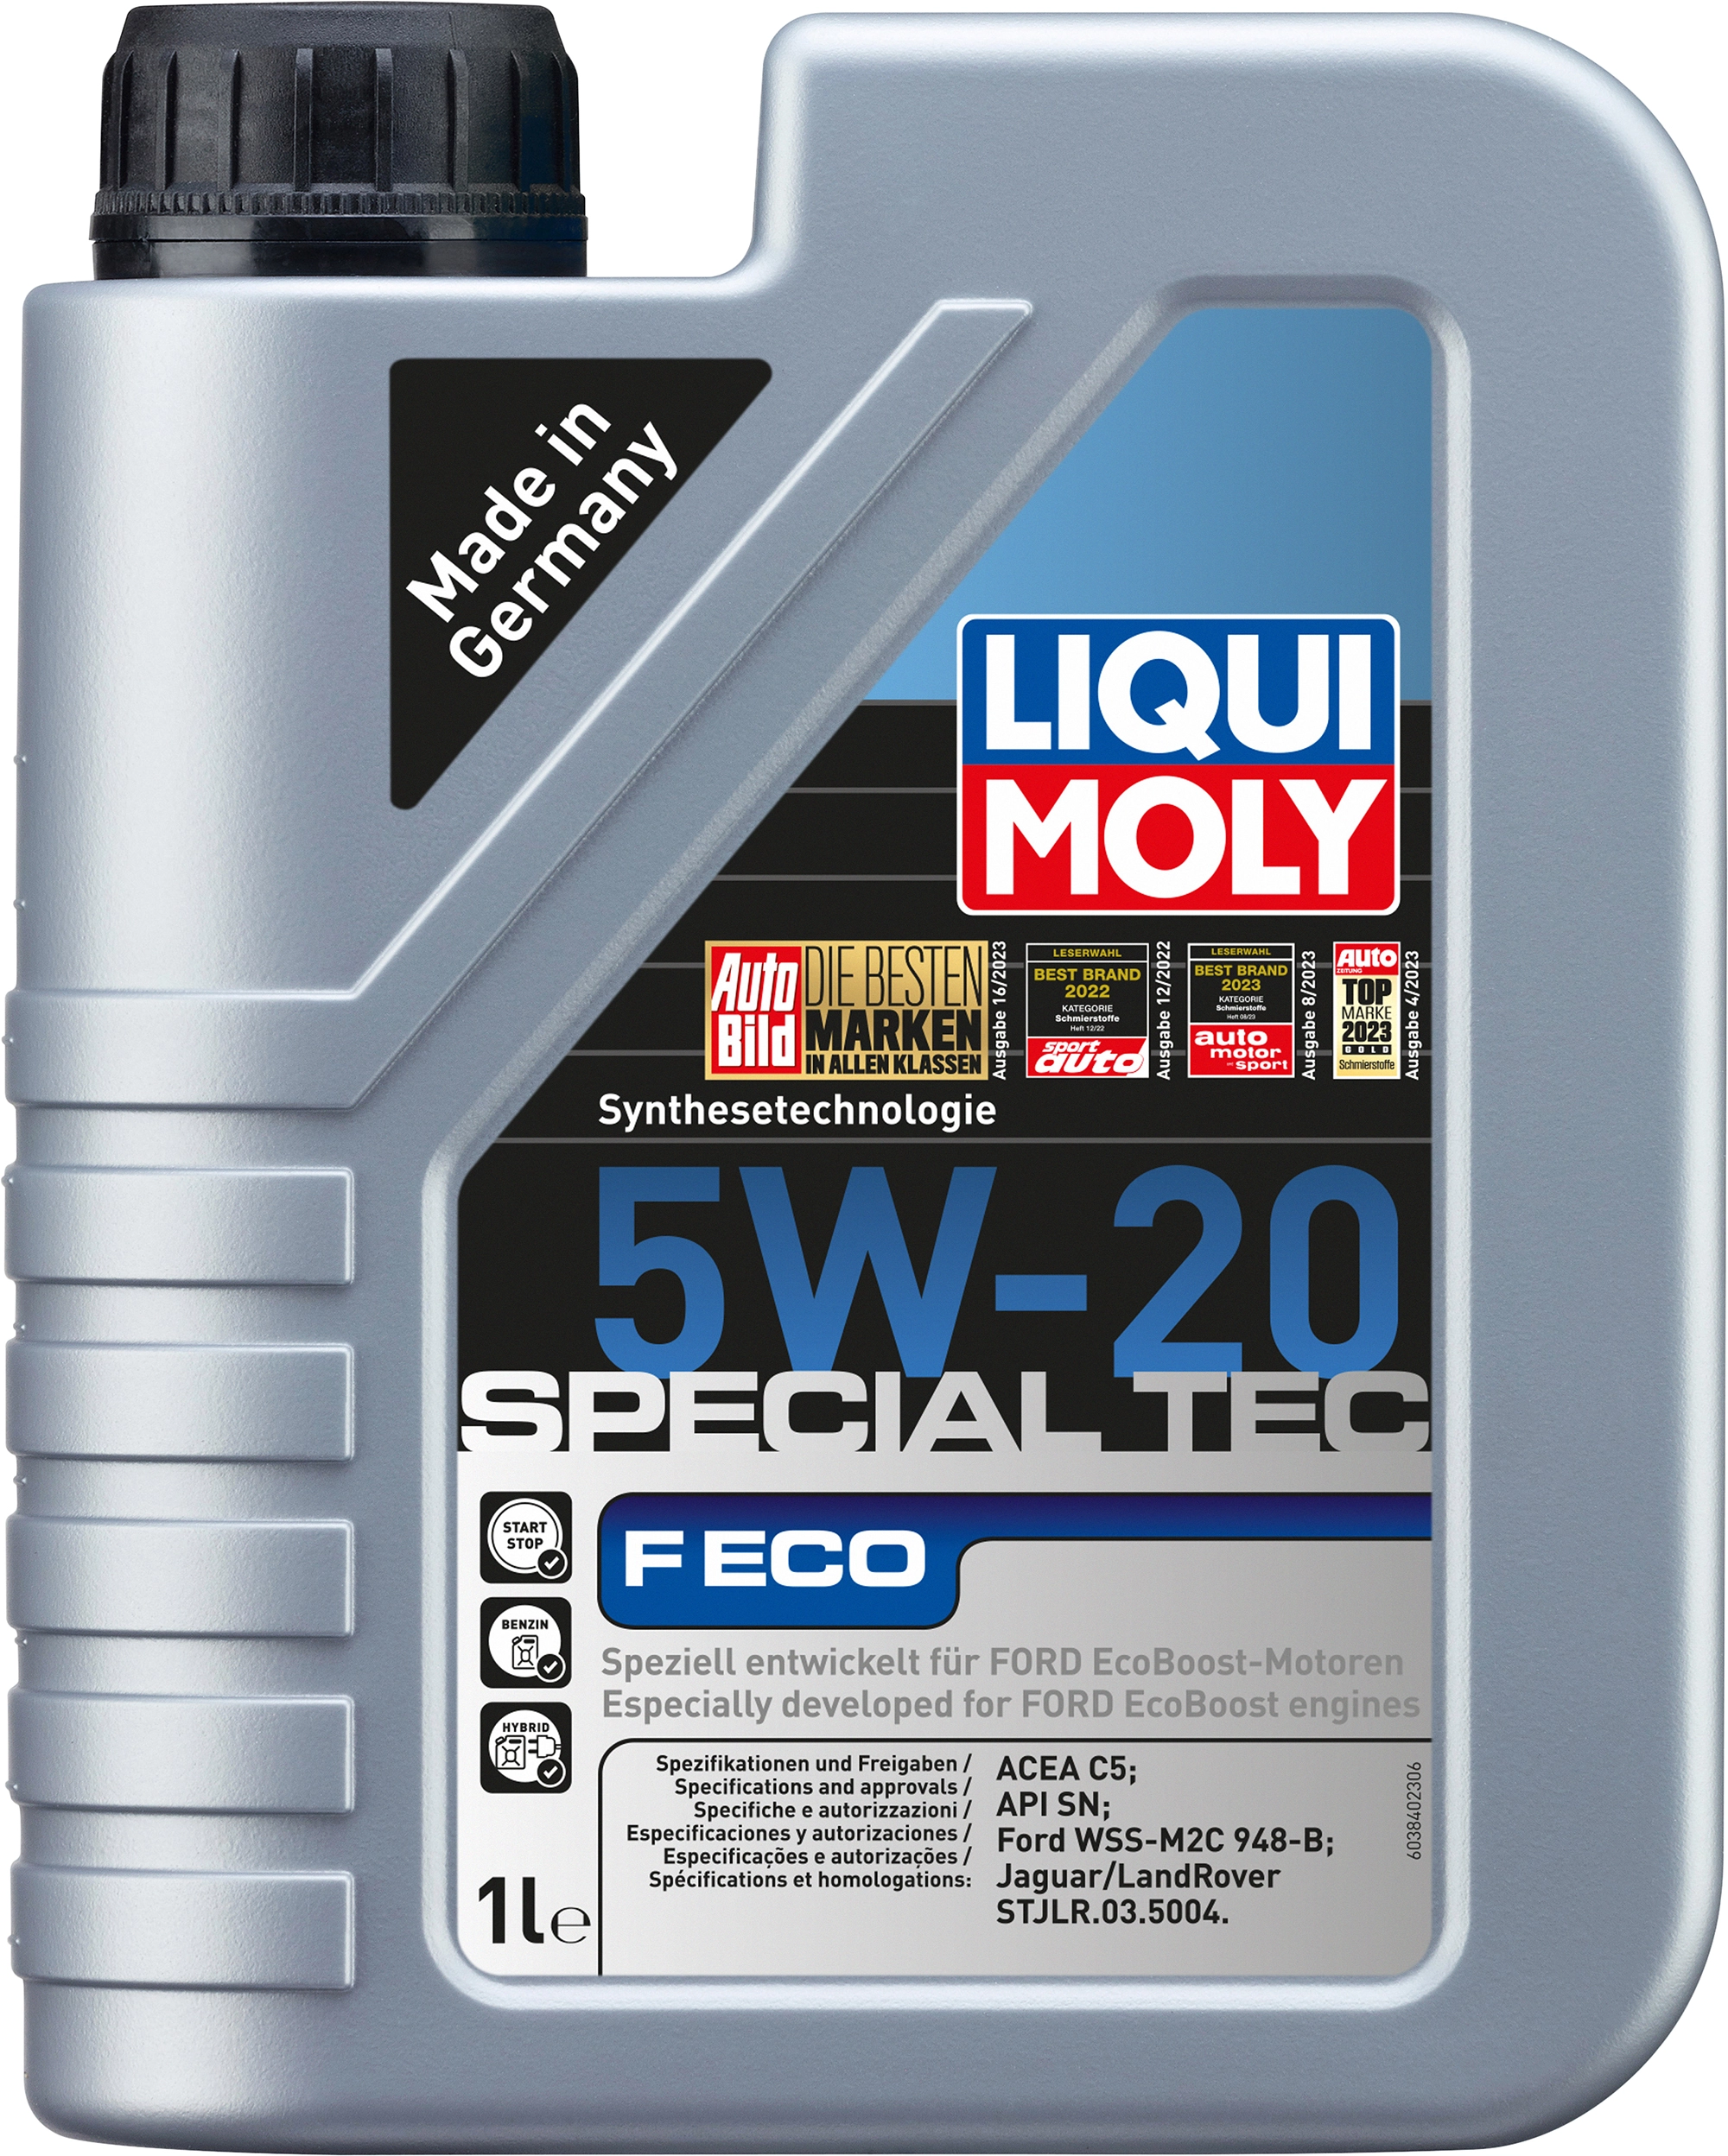 Liqui Moly Special Tec F Eco 5W-20 1 l kaufen bei OBI